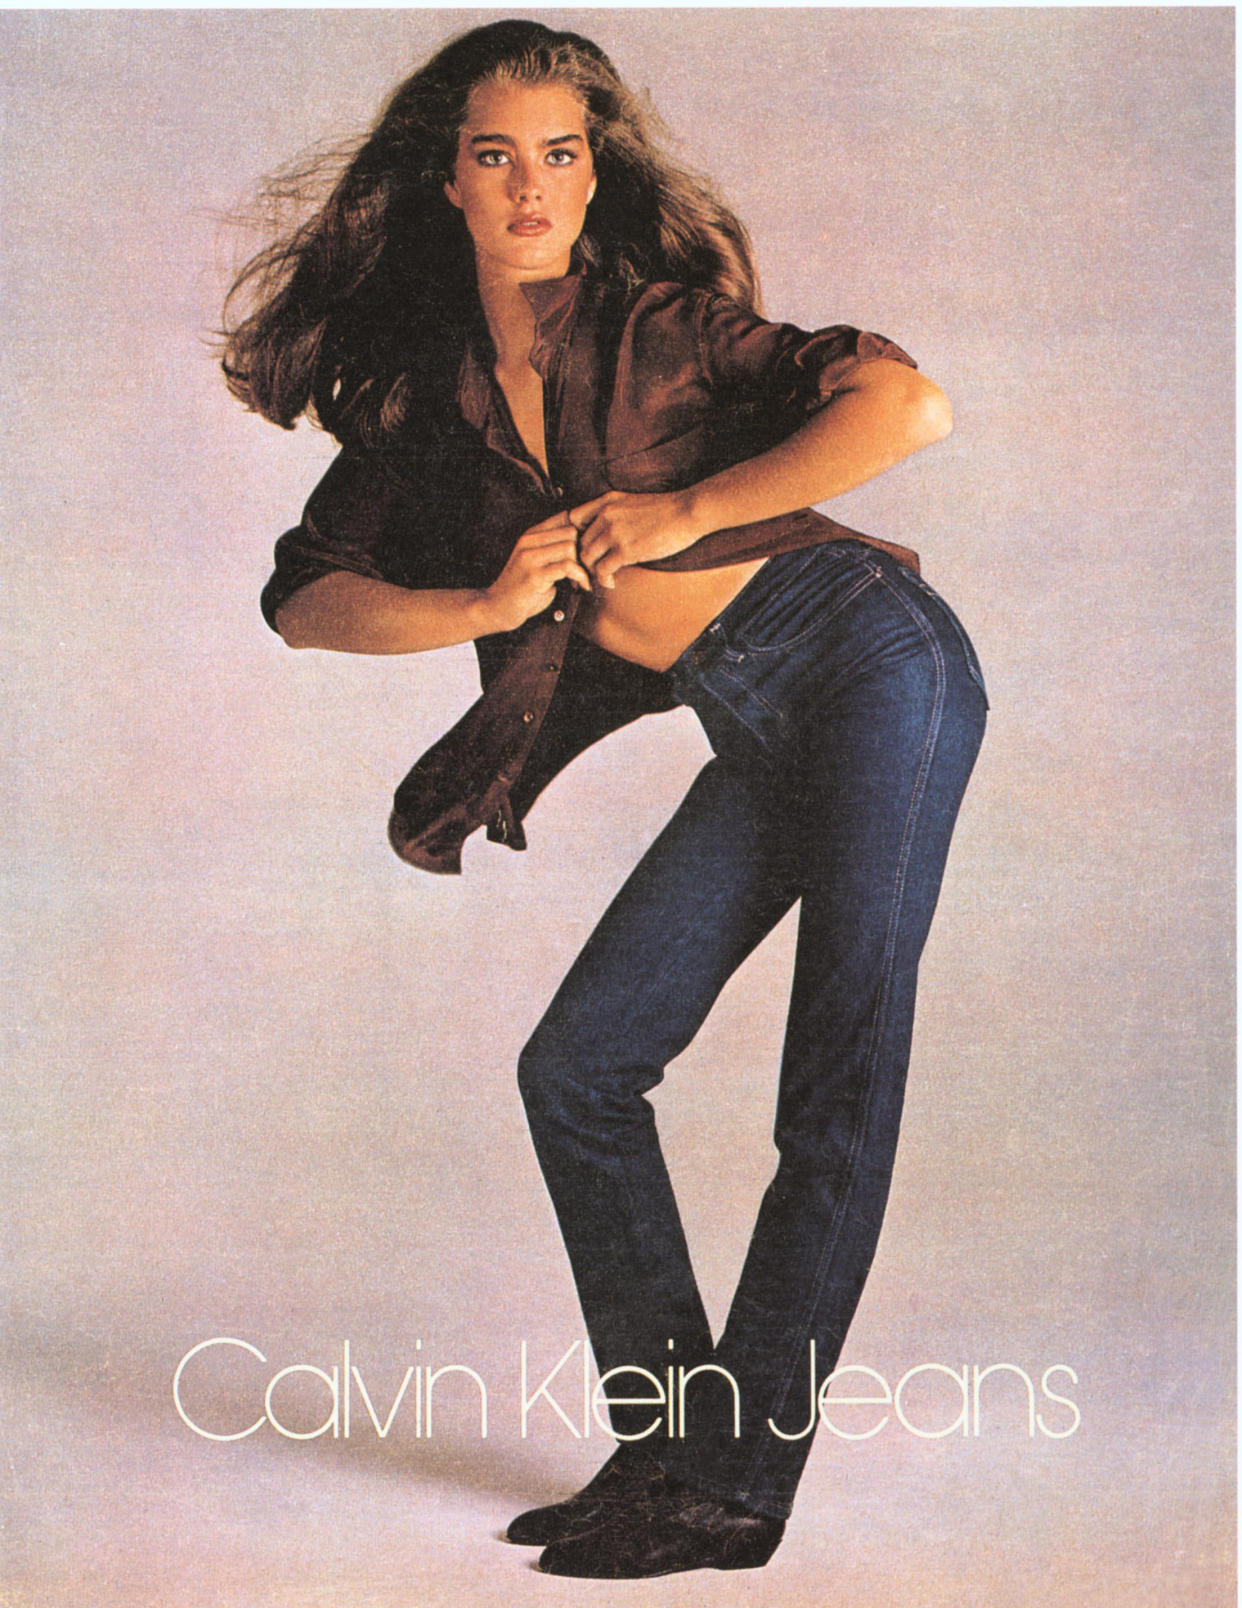 1980s USA Calvin Klein Magazine Advert (Retro AdArchives / Alamy Stock P / Alamy Stock Photo)